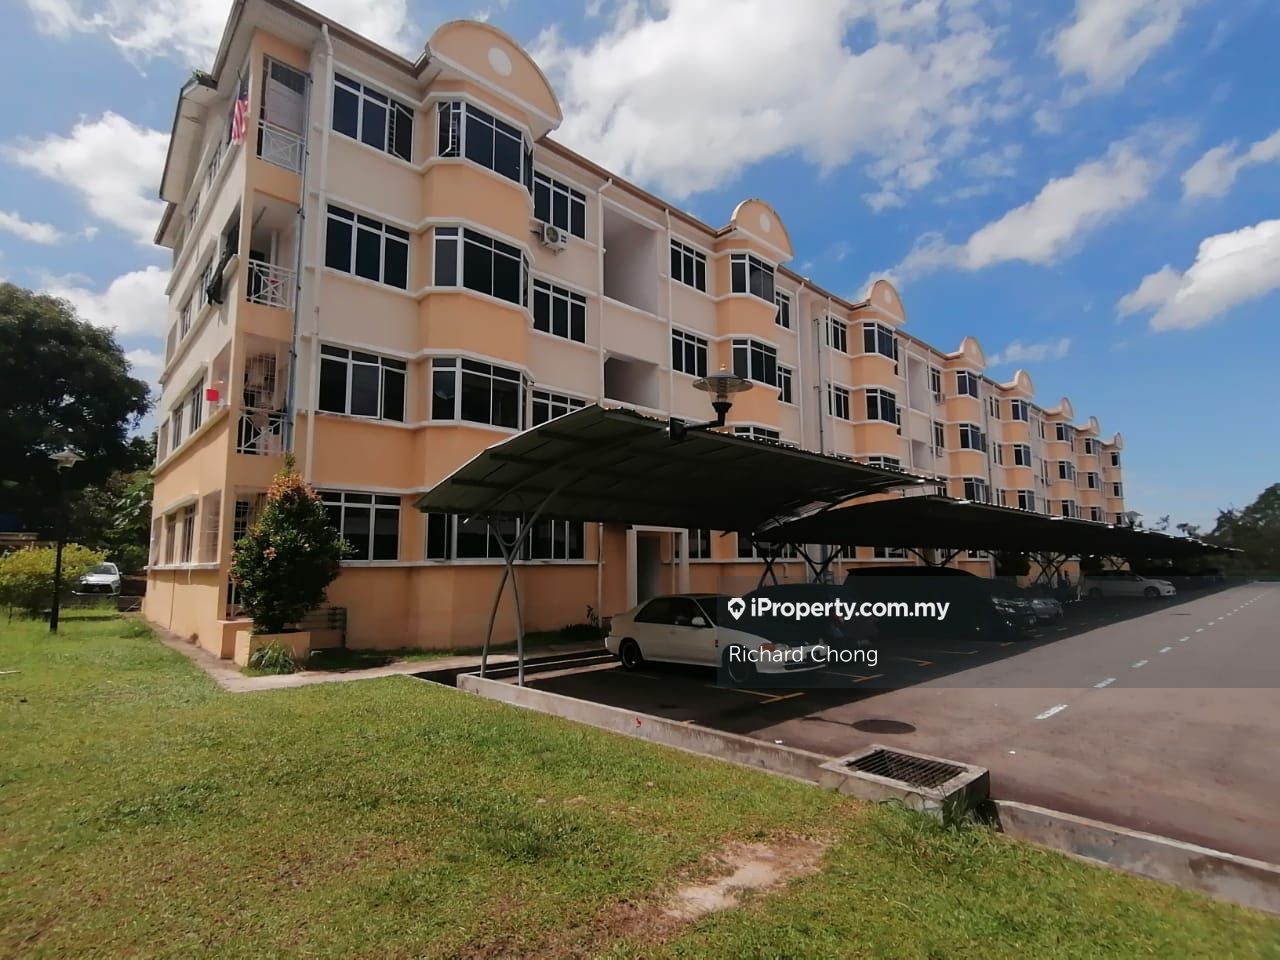 Bandar Sierra Apartment Apartment 2 bedrooms for sale in Kota Kinabalu ...